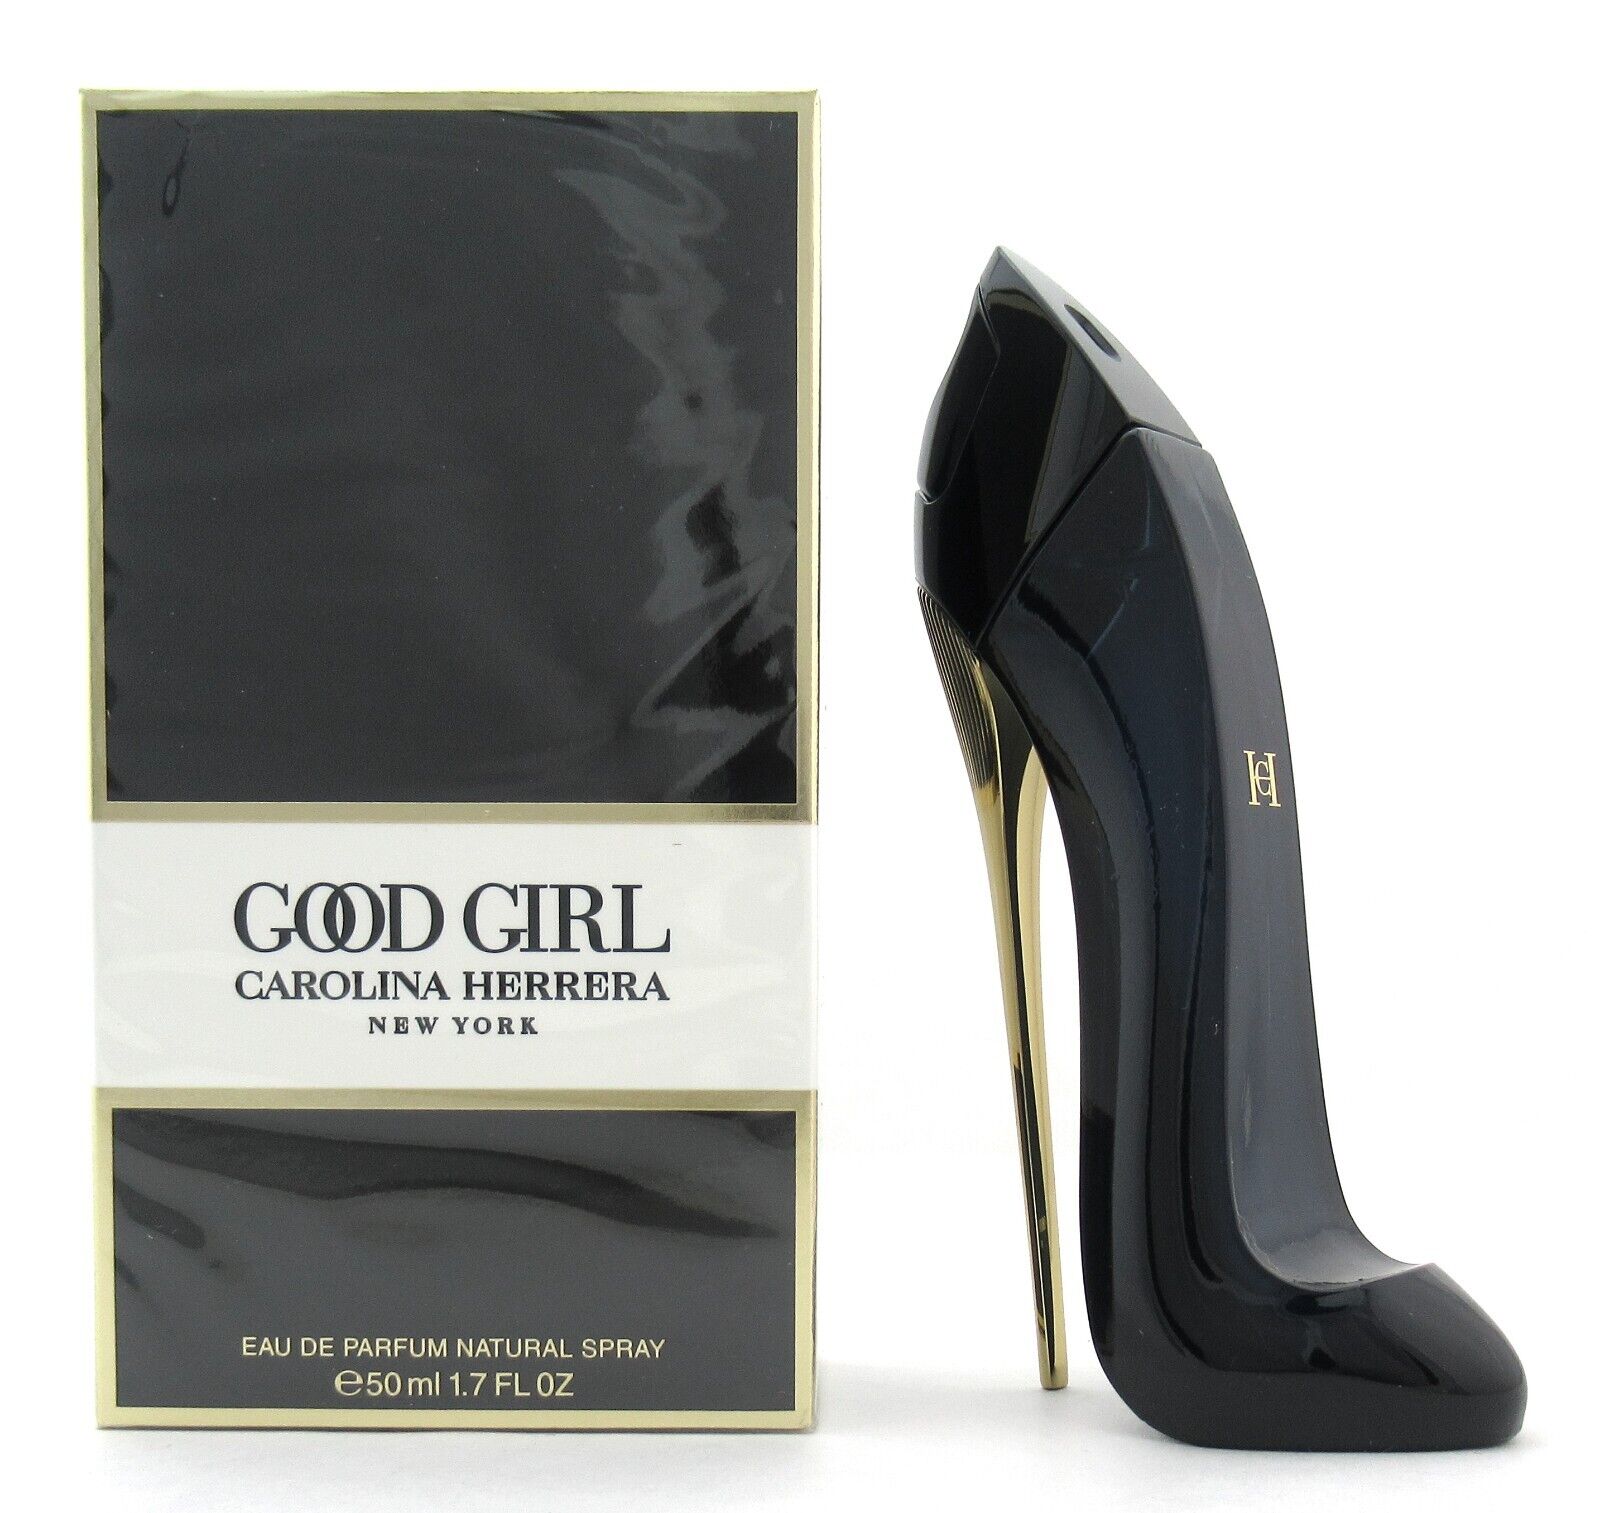 Good Girl Perfume by Carolina Herrera 1.7 oz. Eau de Parfum Spray